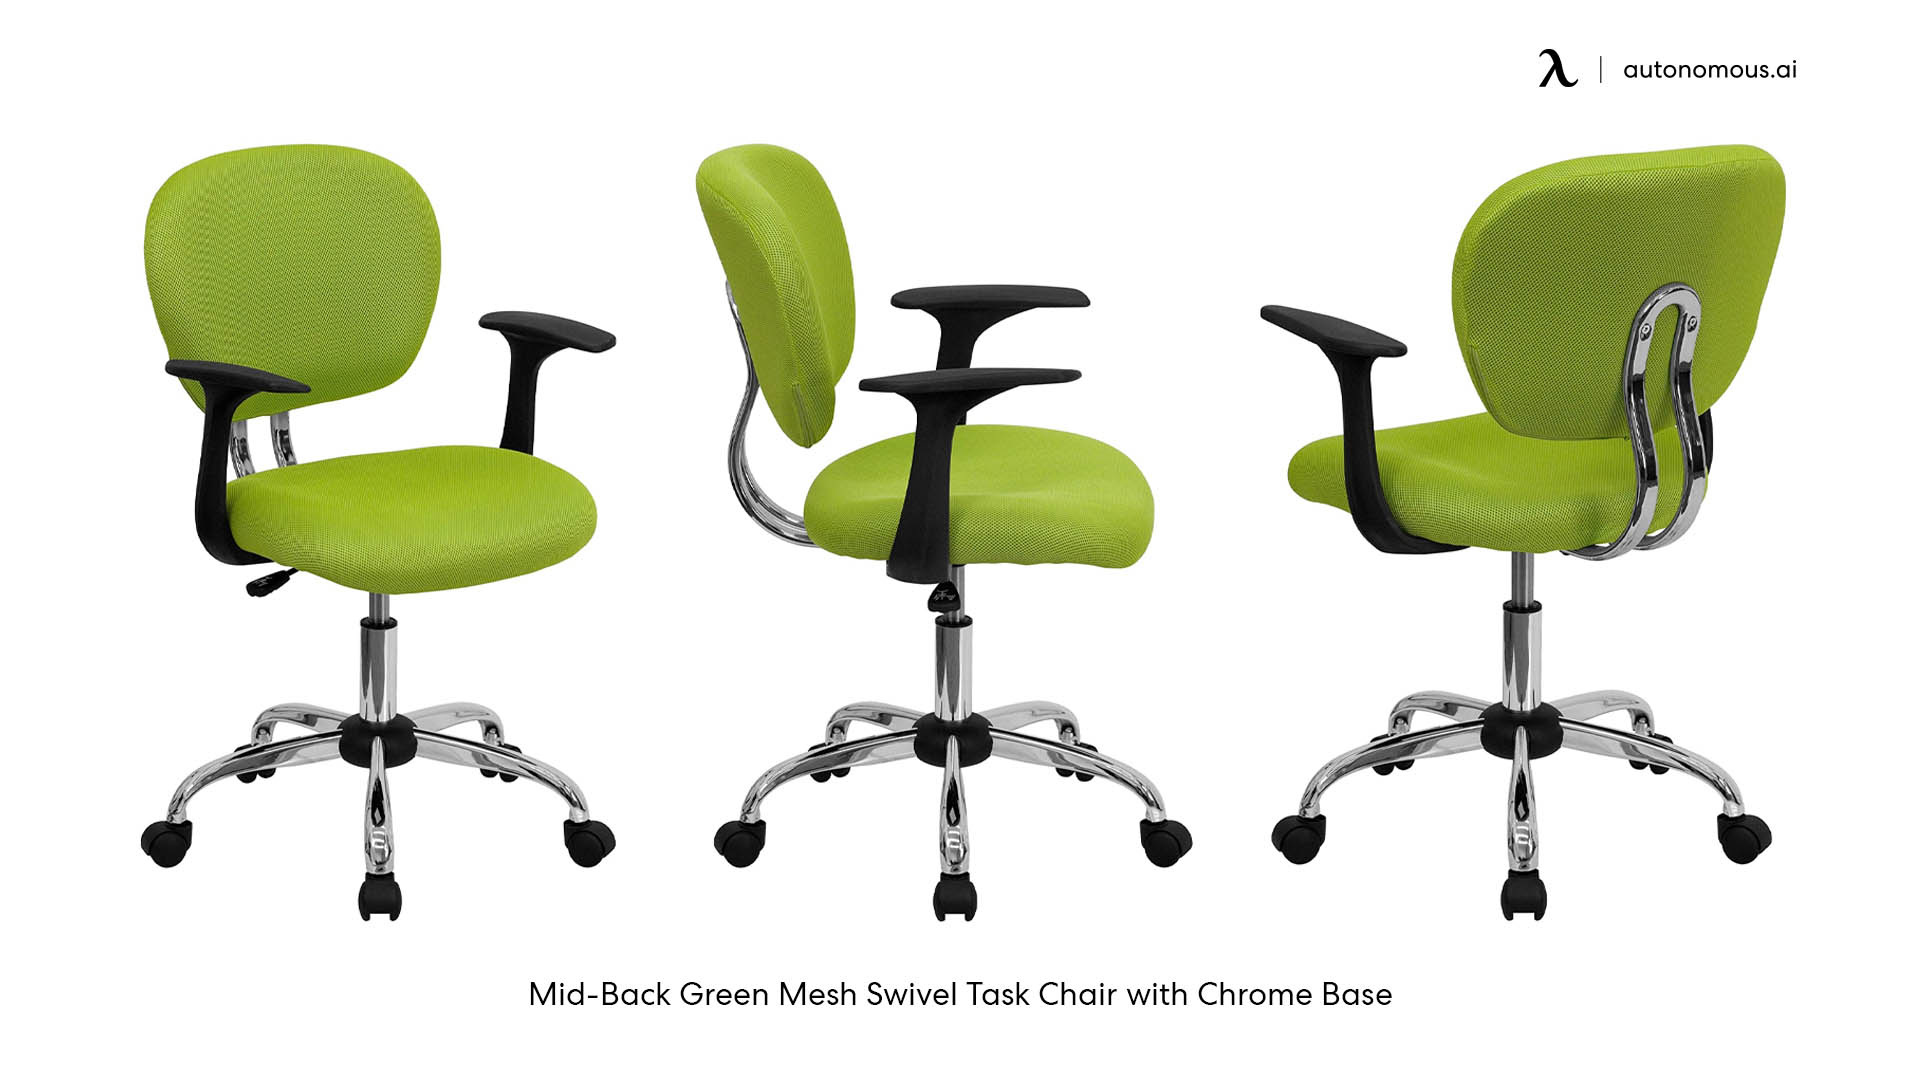 Chrome Base green office chair